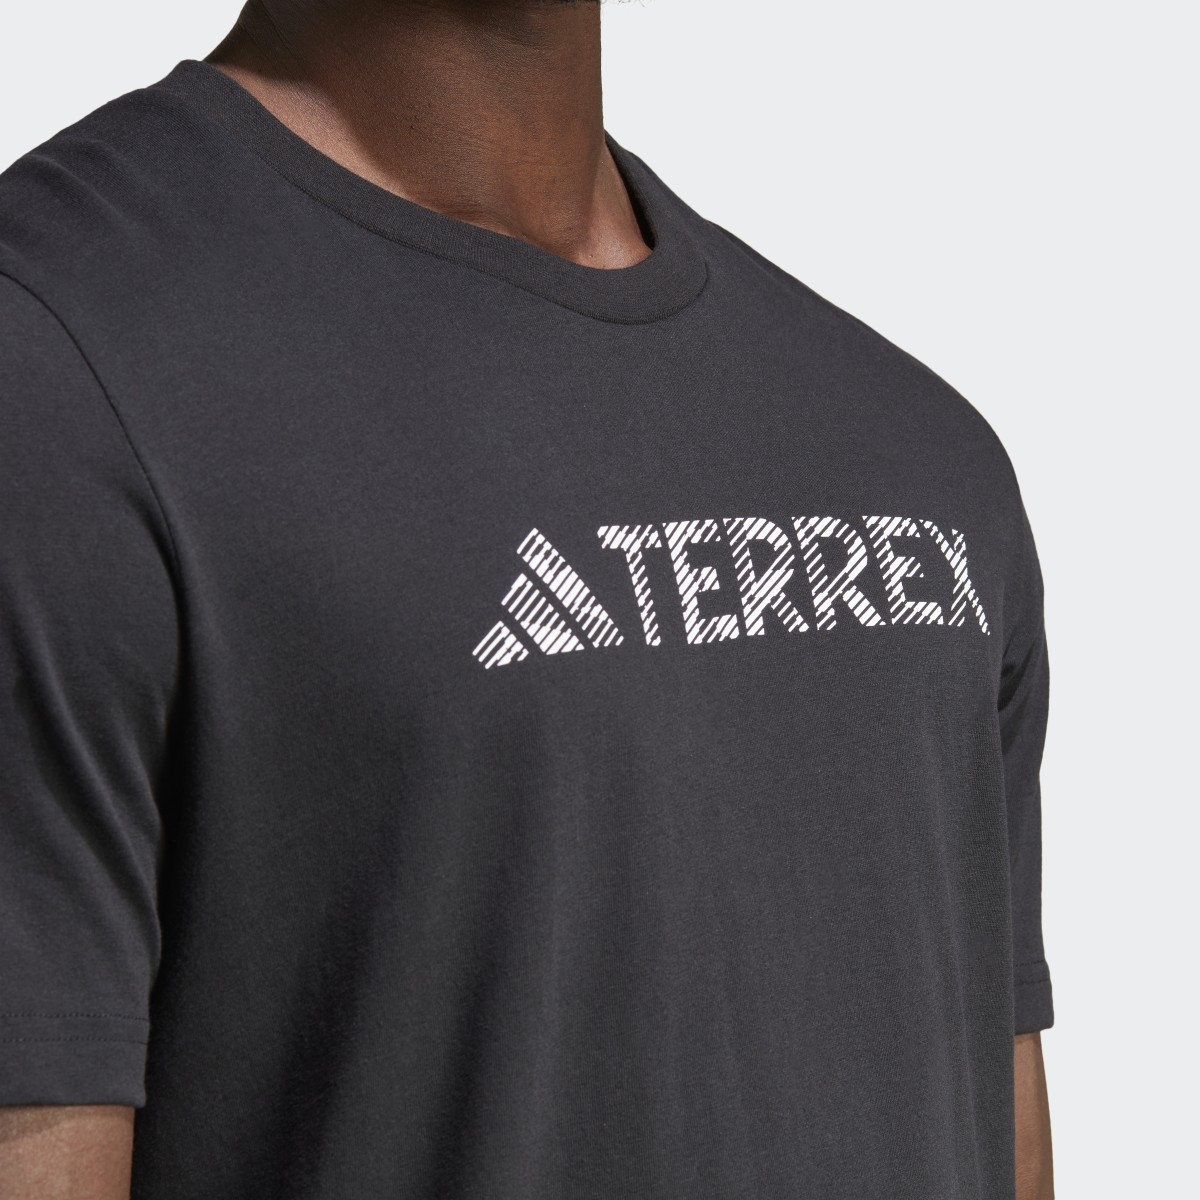 Adidas Terrex Classic Logo T-Shirt. 7